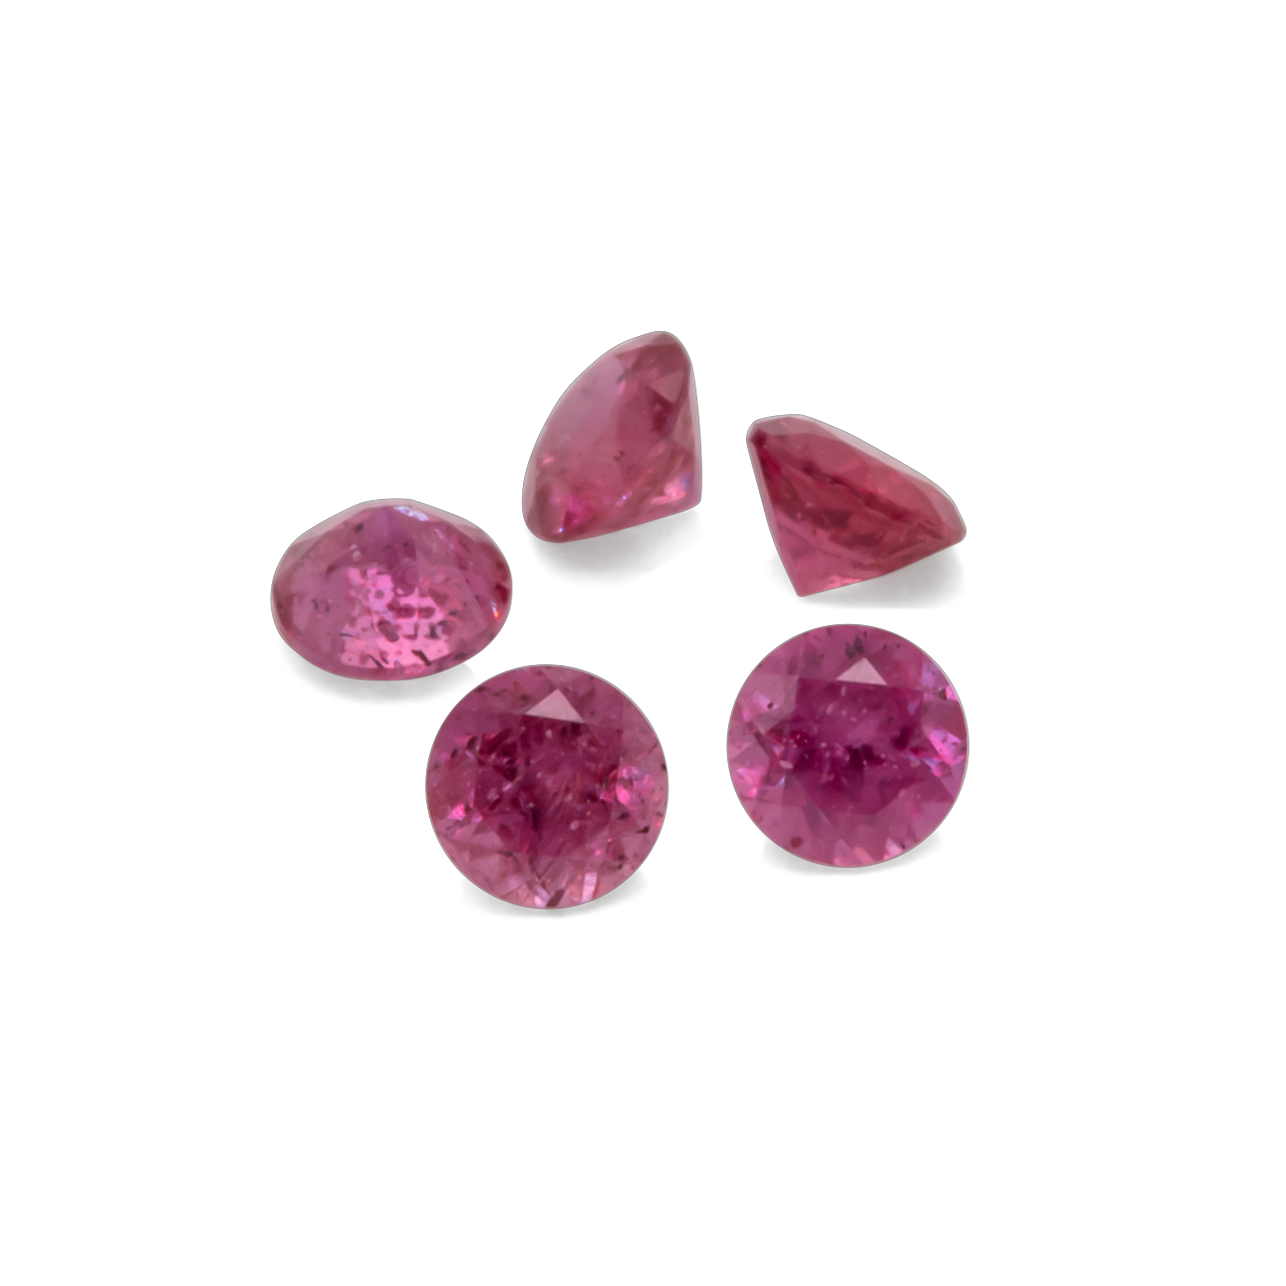 Saphir - pink, rund, 2x2 mm, ca. 0,04 cts, Nr. XSR11156